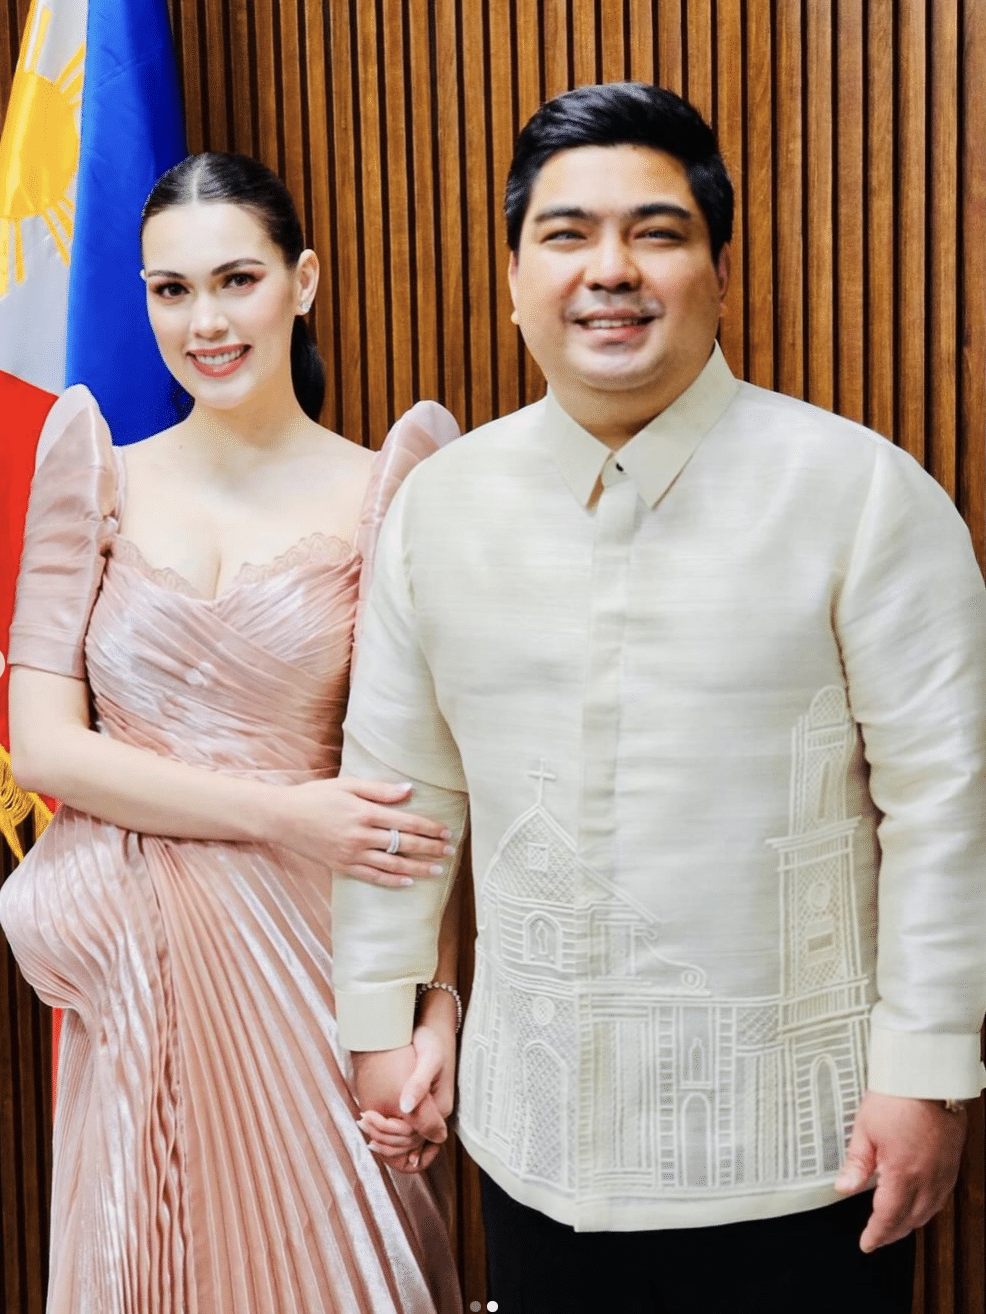 Cavite Rep. Jolo Revilla with wife Angel Alita-Revilla. Image from Instagram